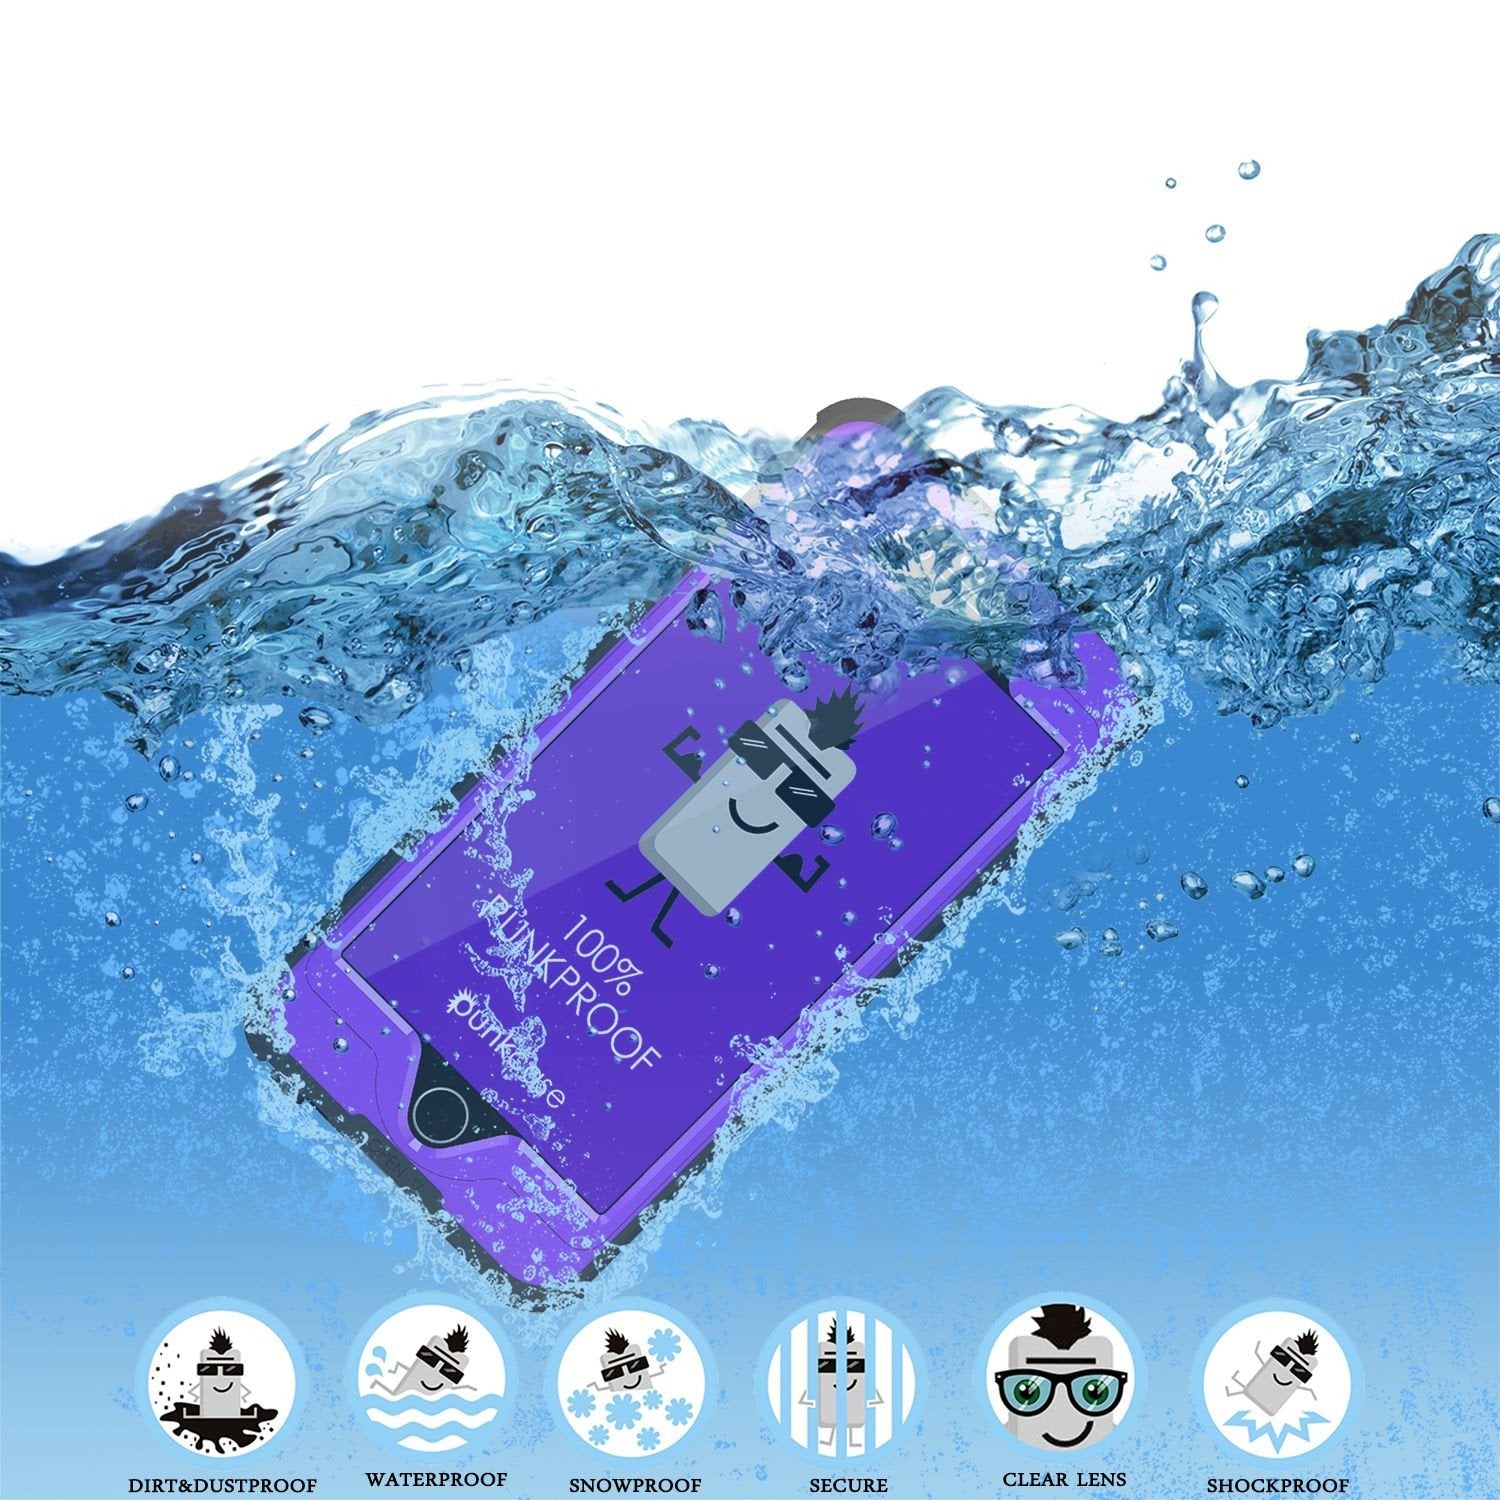 iPhone 6s/6  Waterproof Case, PunkCase StudStar Purple w/ Attached Screen Protector | Warranty